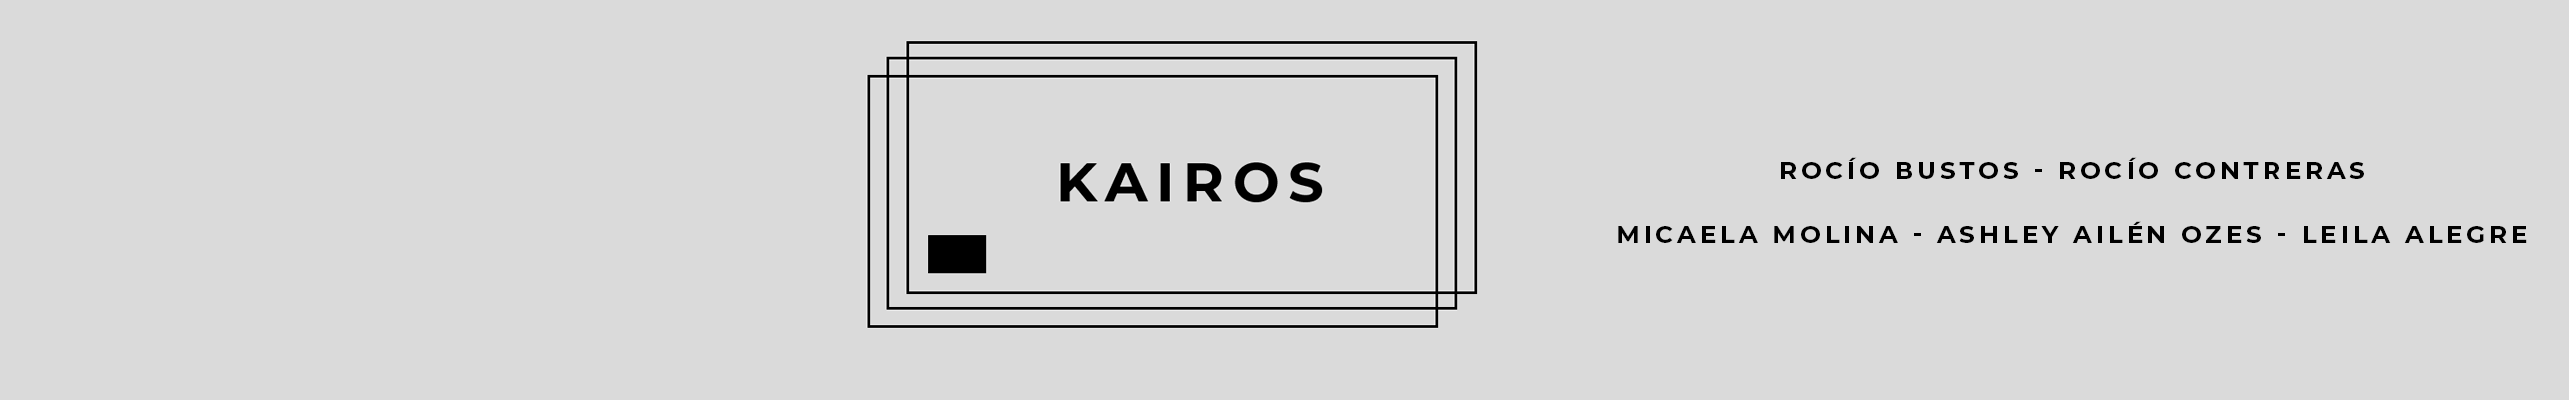 Kairos Productora's profile banner